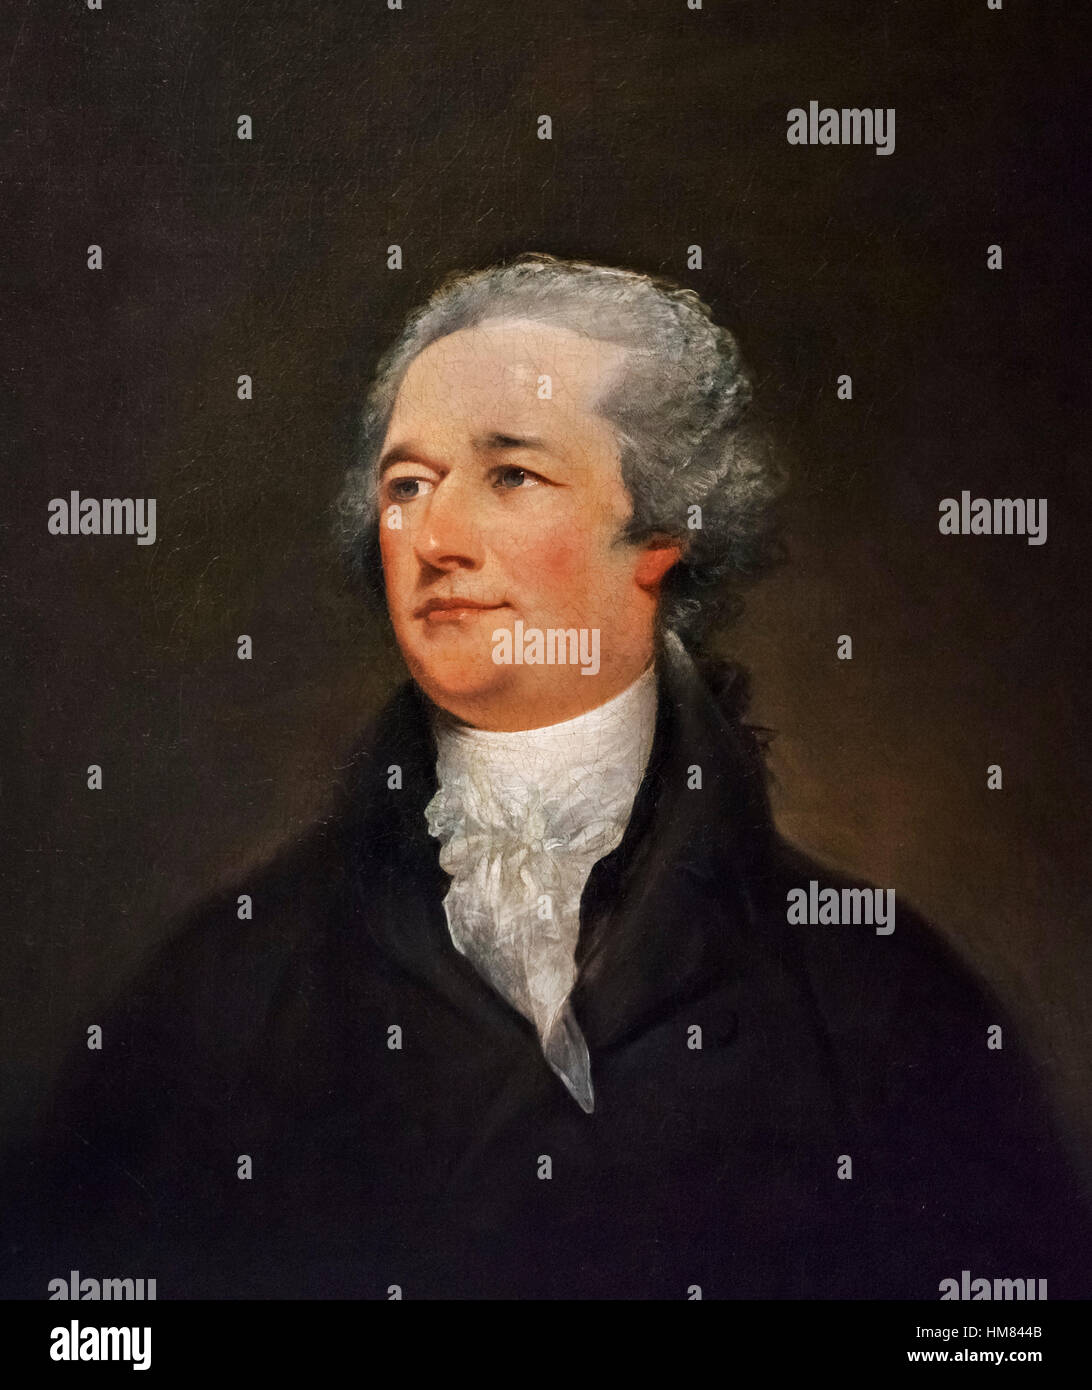 Alexander Hamilton (1755-1804), portrait by John Trumbull, oil on canvas, c.1804-6 Stock Photo